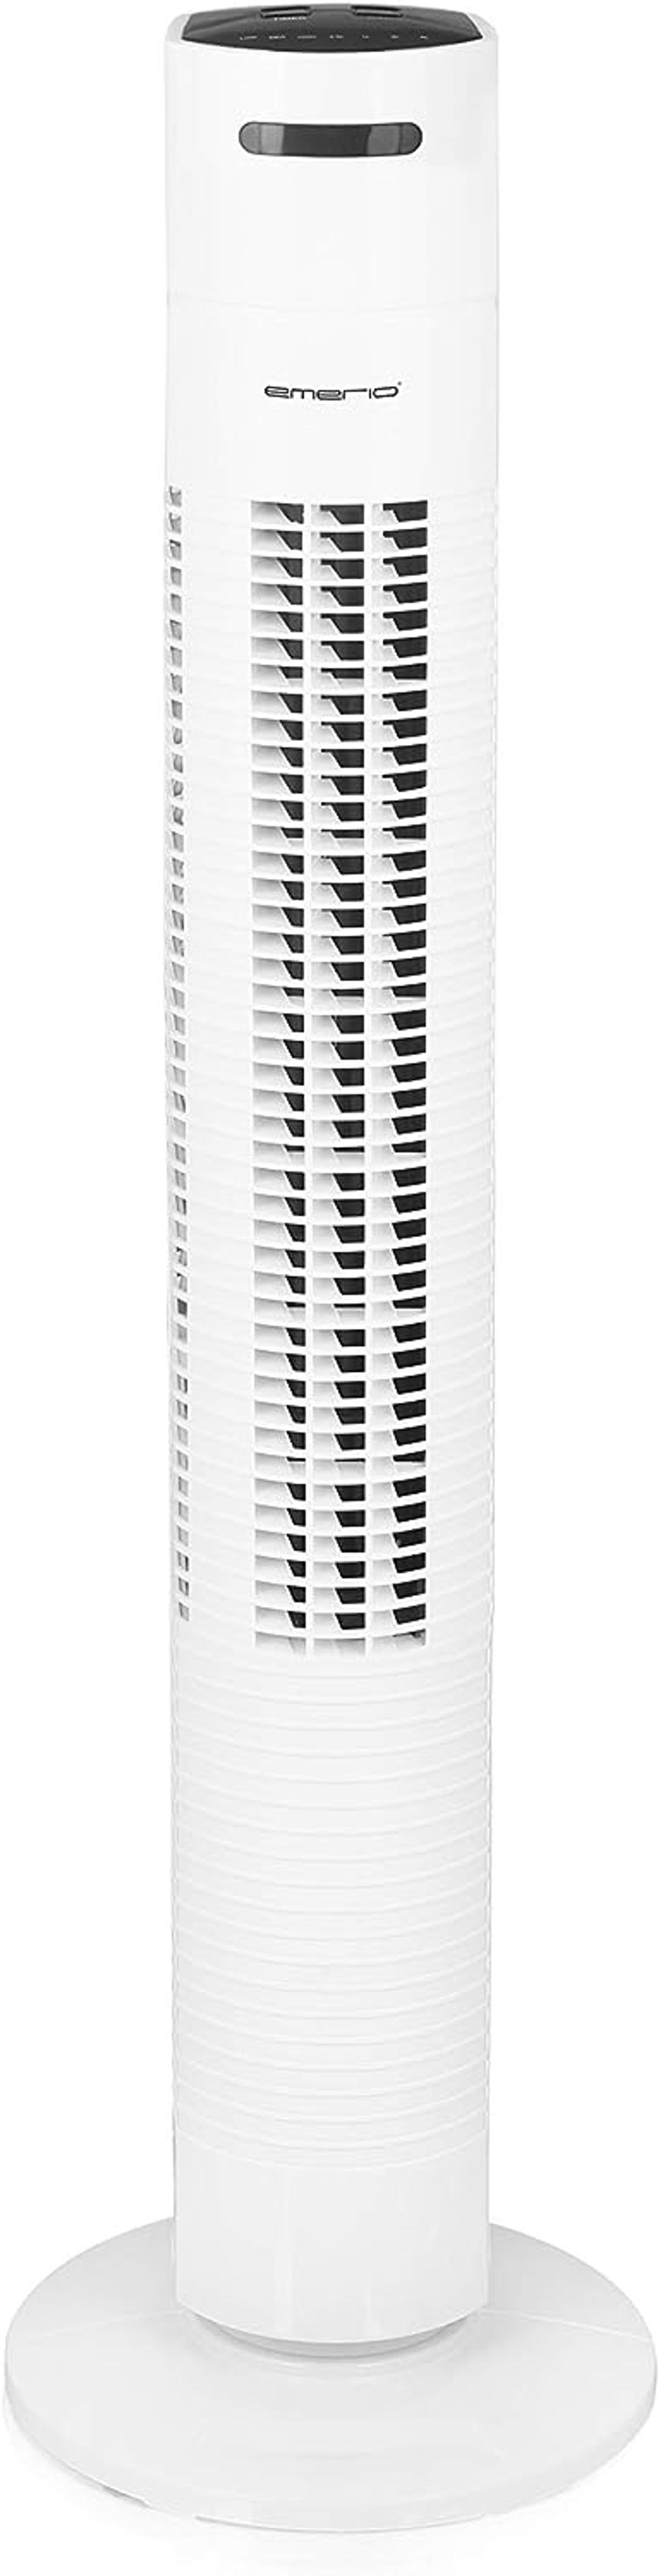 EMERIO TFN-123015 Watt) Weiß TOWER-VENTILATOR Turmventilator (35